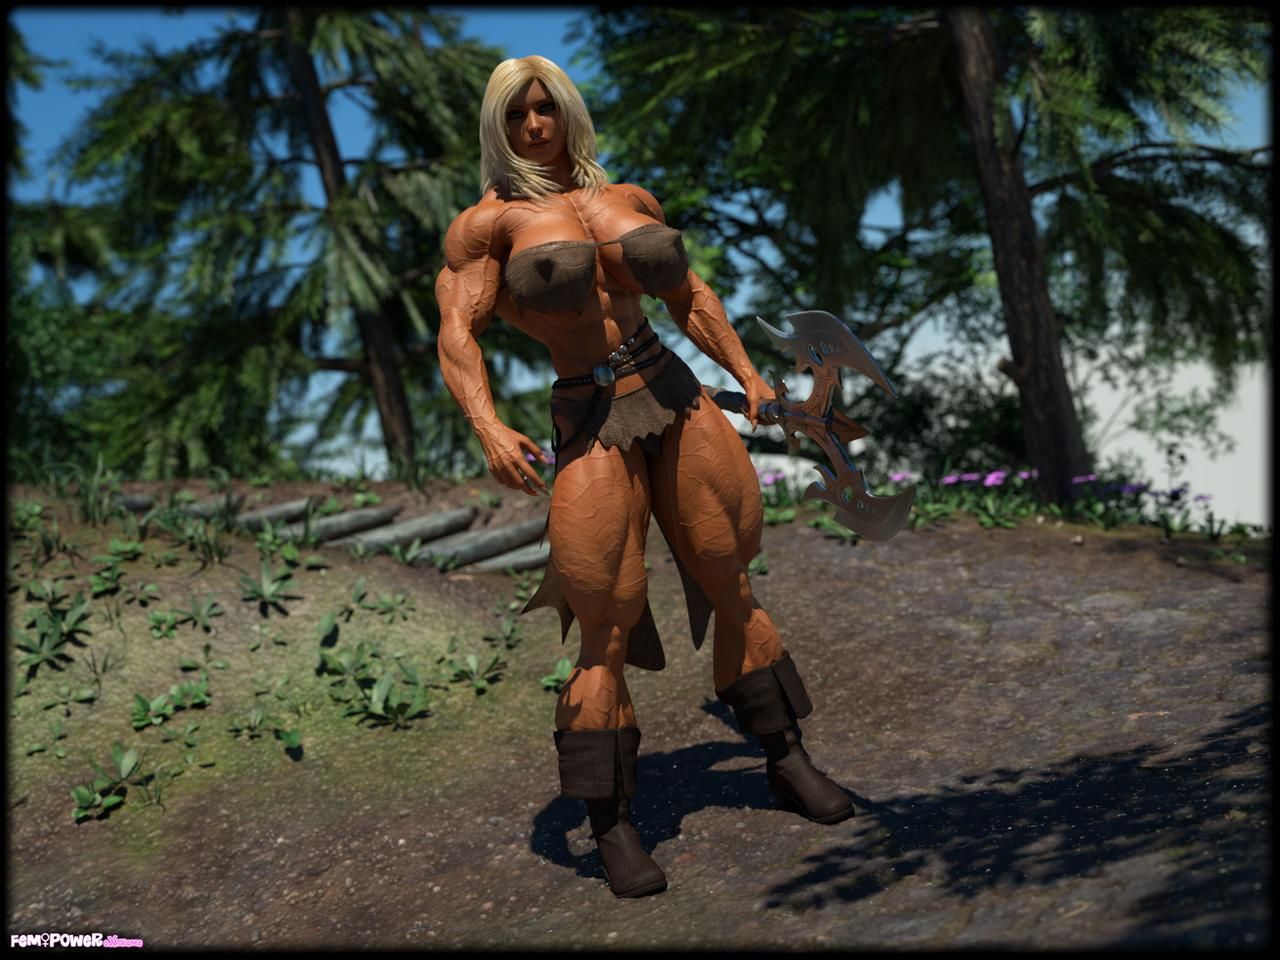 Muscle girls 3D models_ part 2 by Tigersan 226